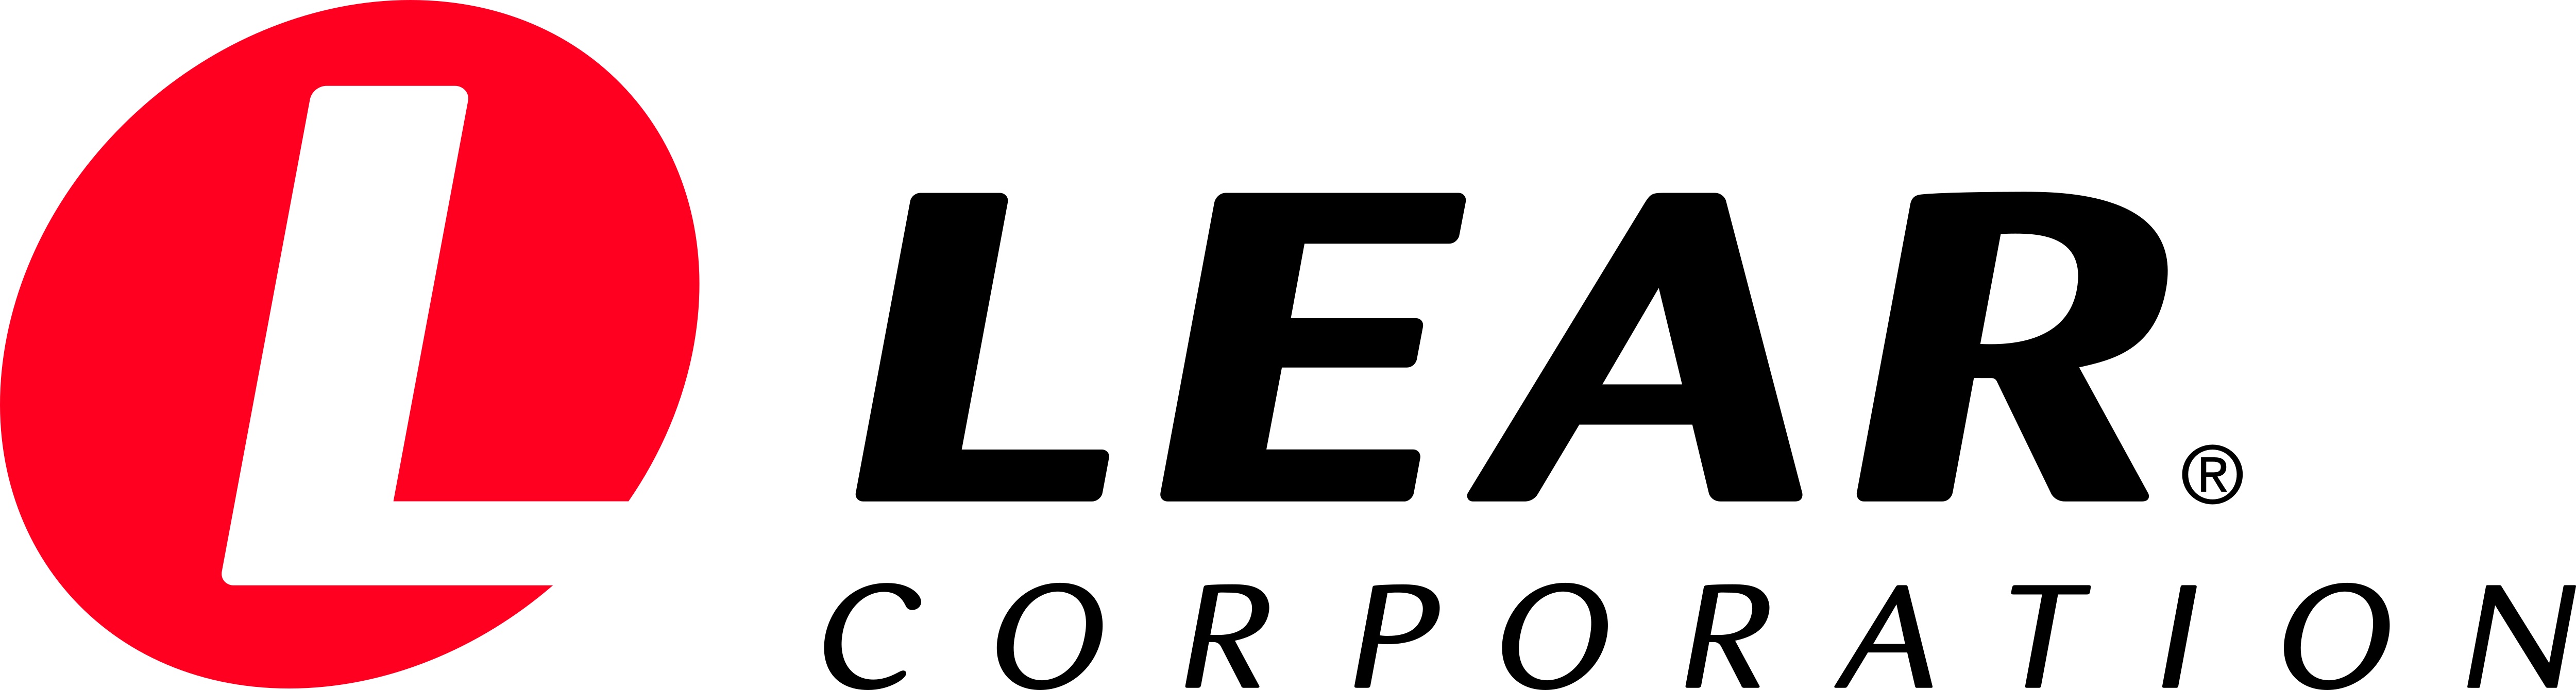 Lear_Corp_Logo.jpg